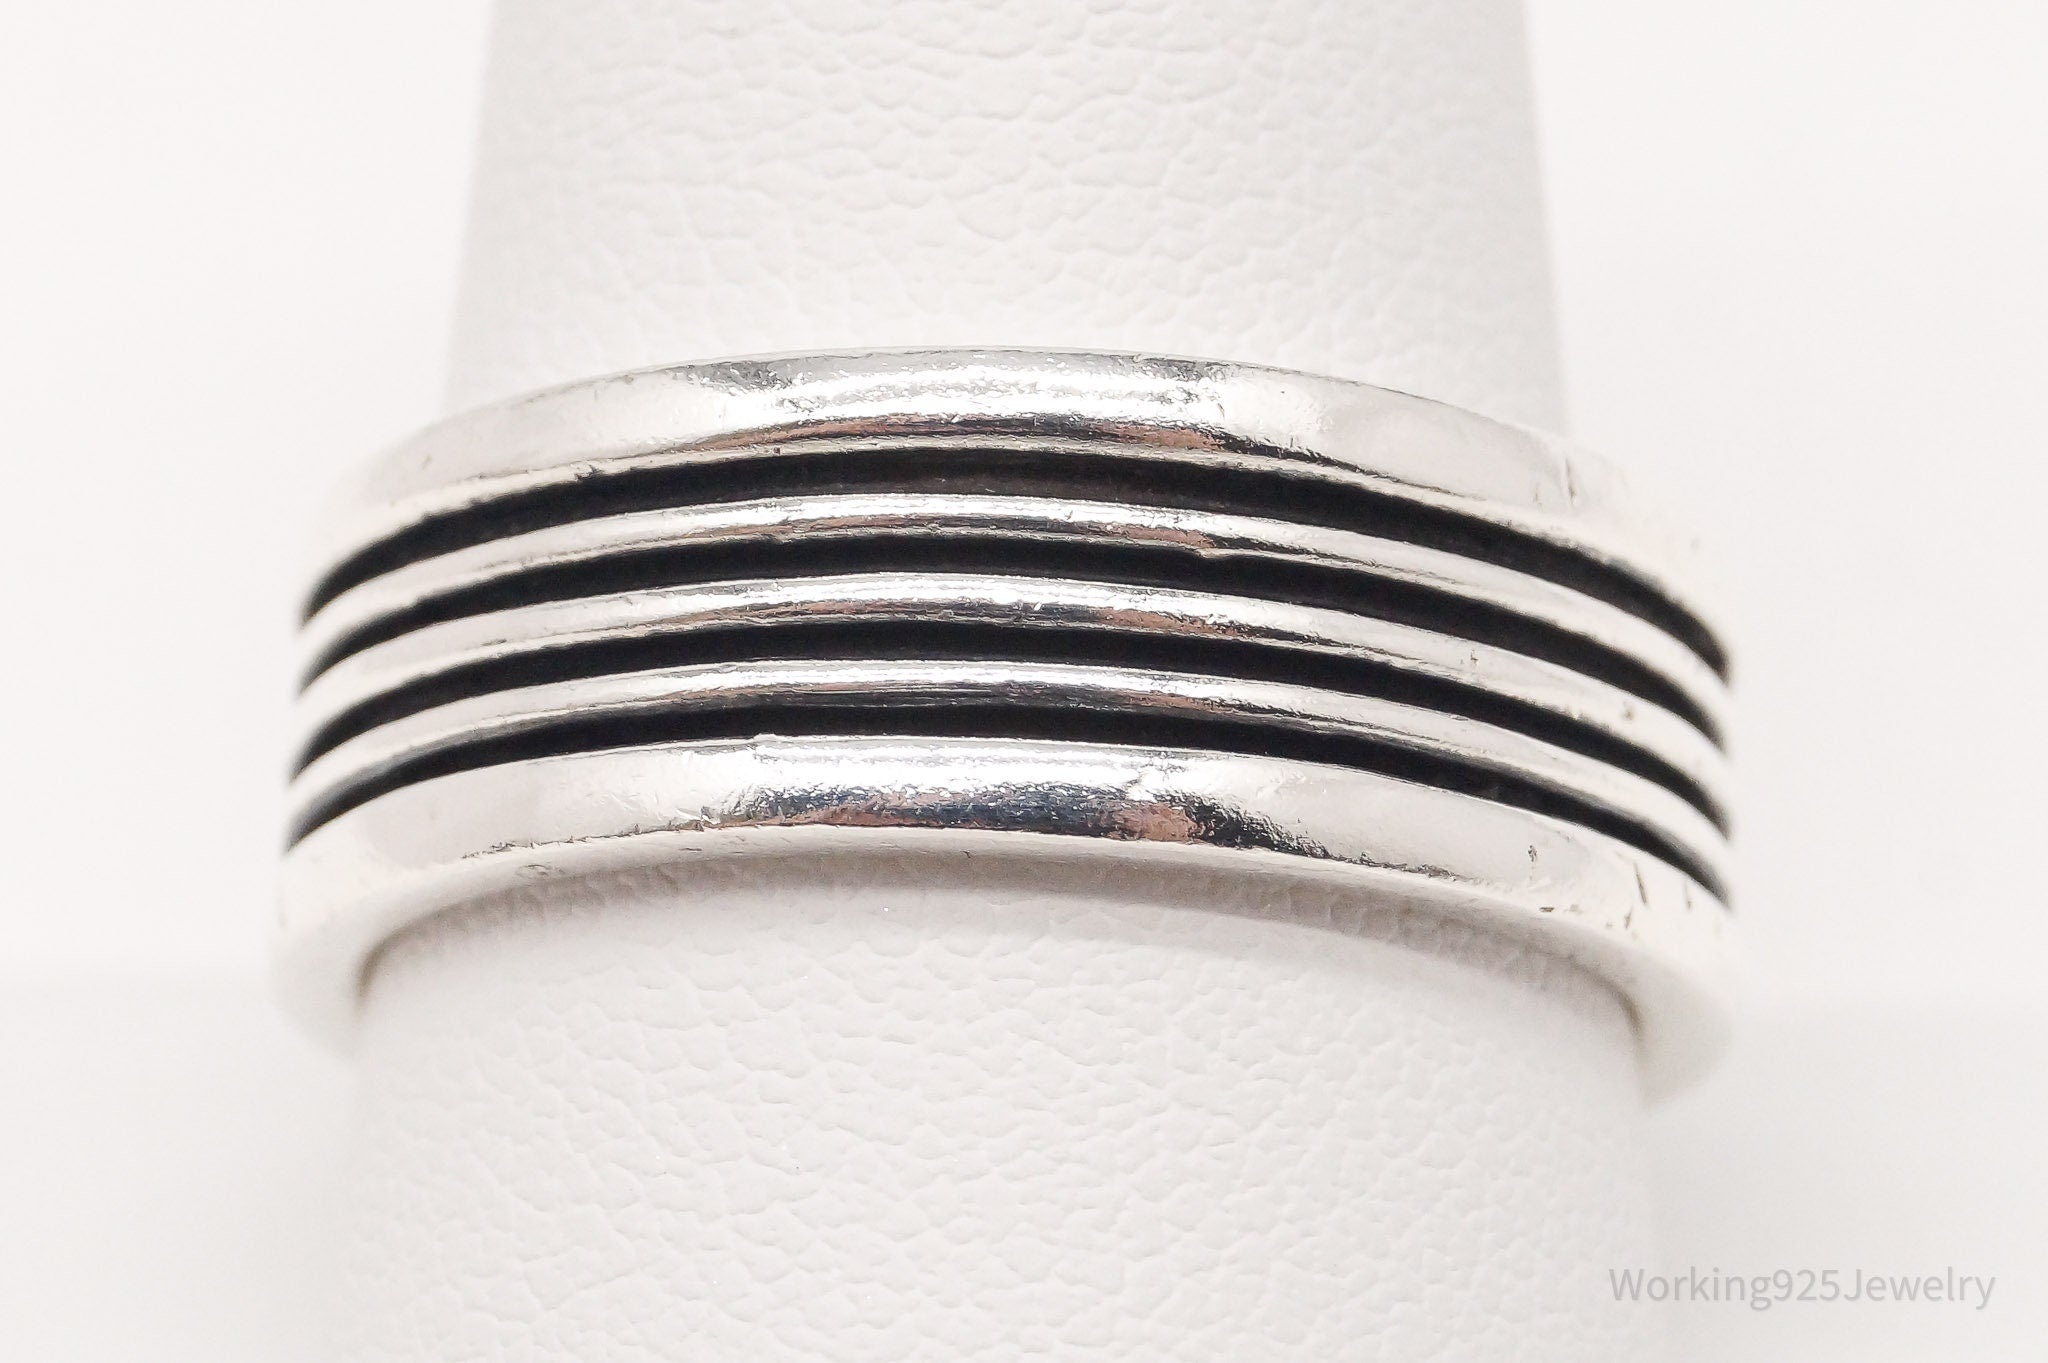 Vintage Modernist Ribbed Style Sterling Silver Ring - Size 10.25